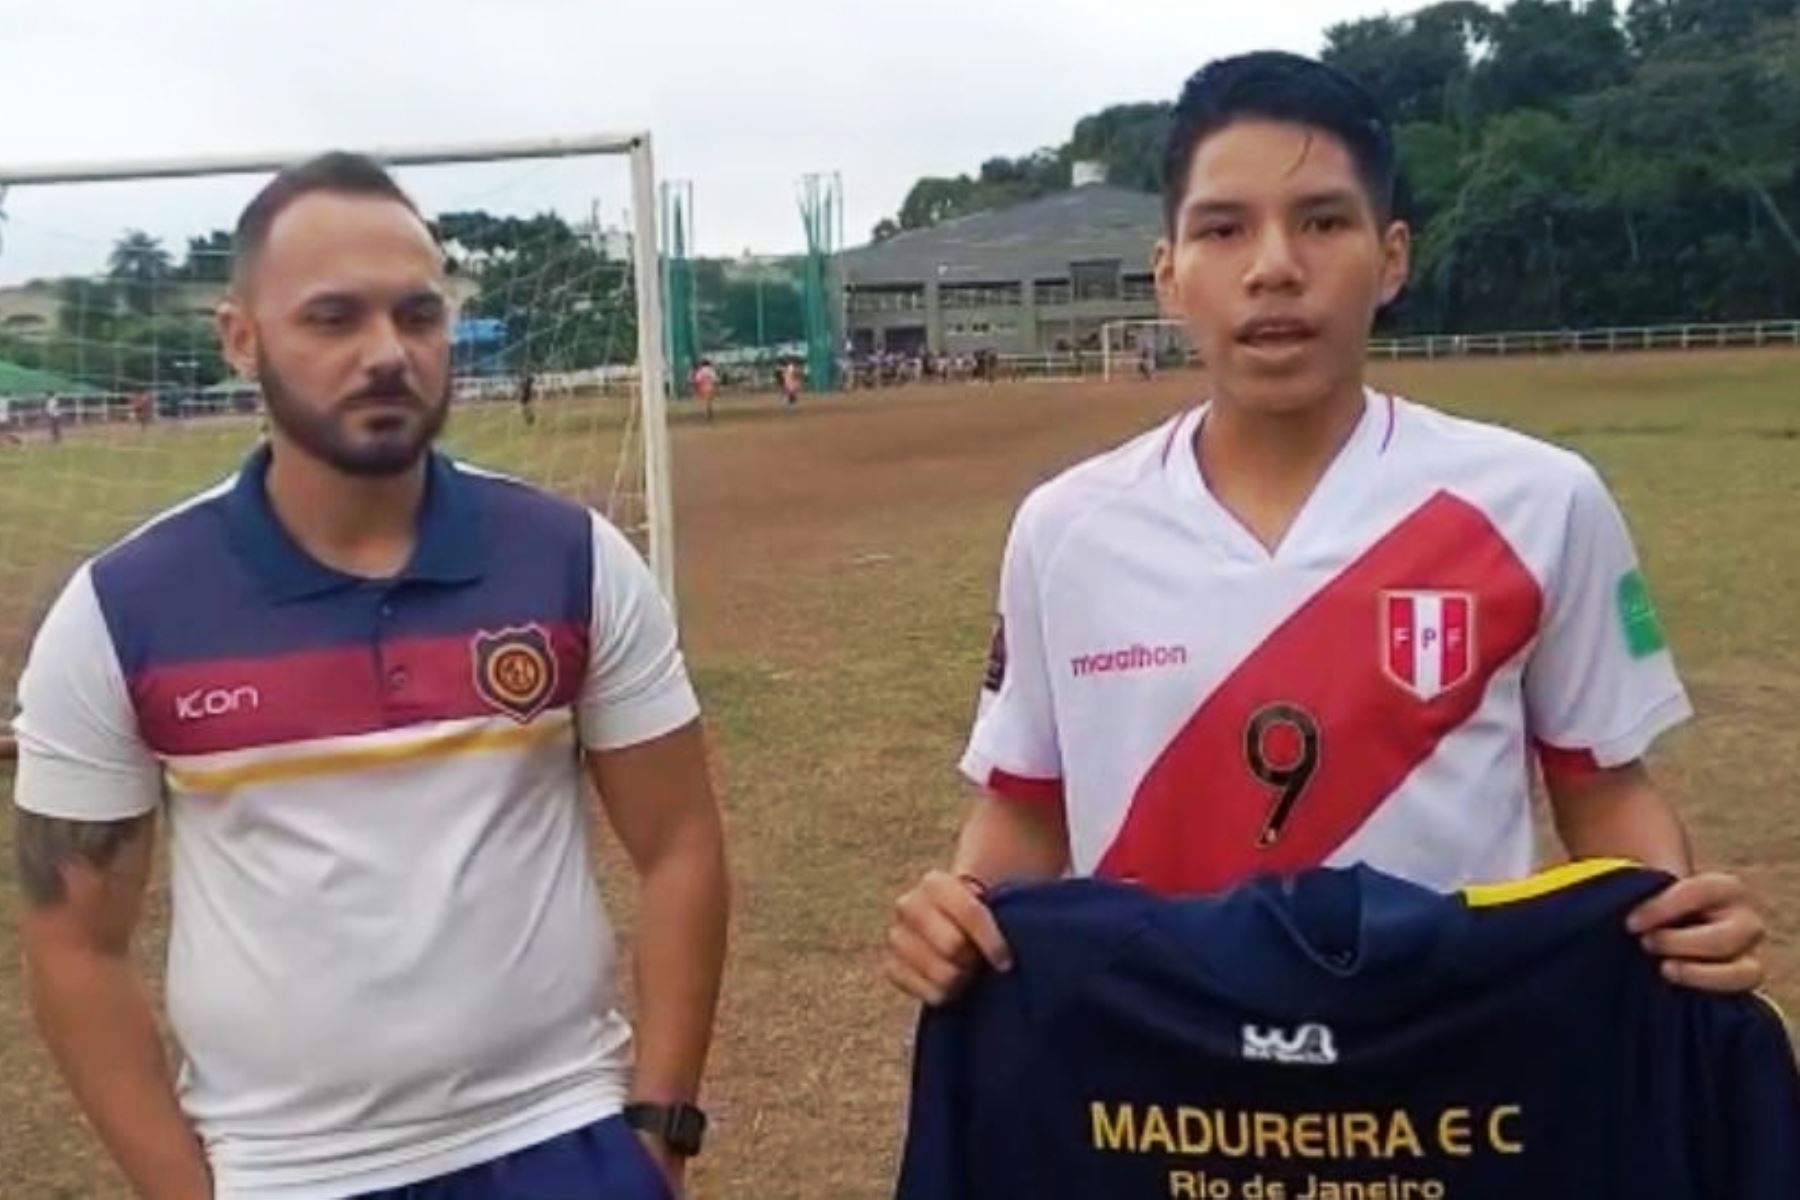 El emotivo mensaje a Lapadula de escolar peruano fichado por equipo de Brasil